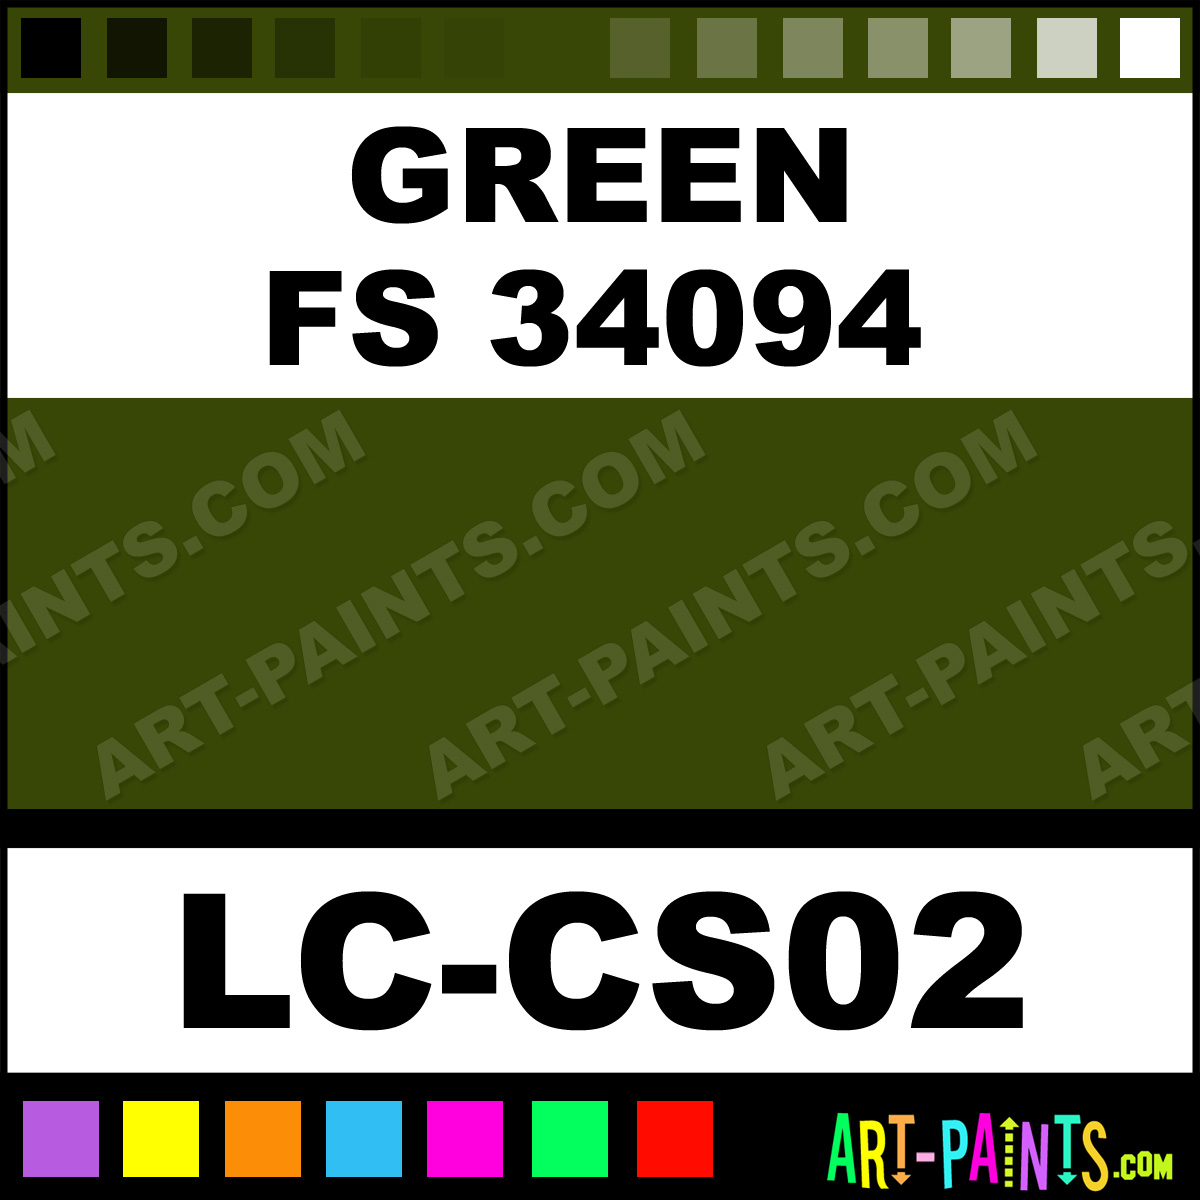 Green-FS-34094-lg.jpg